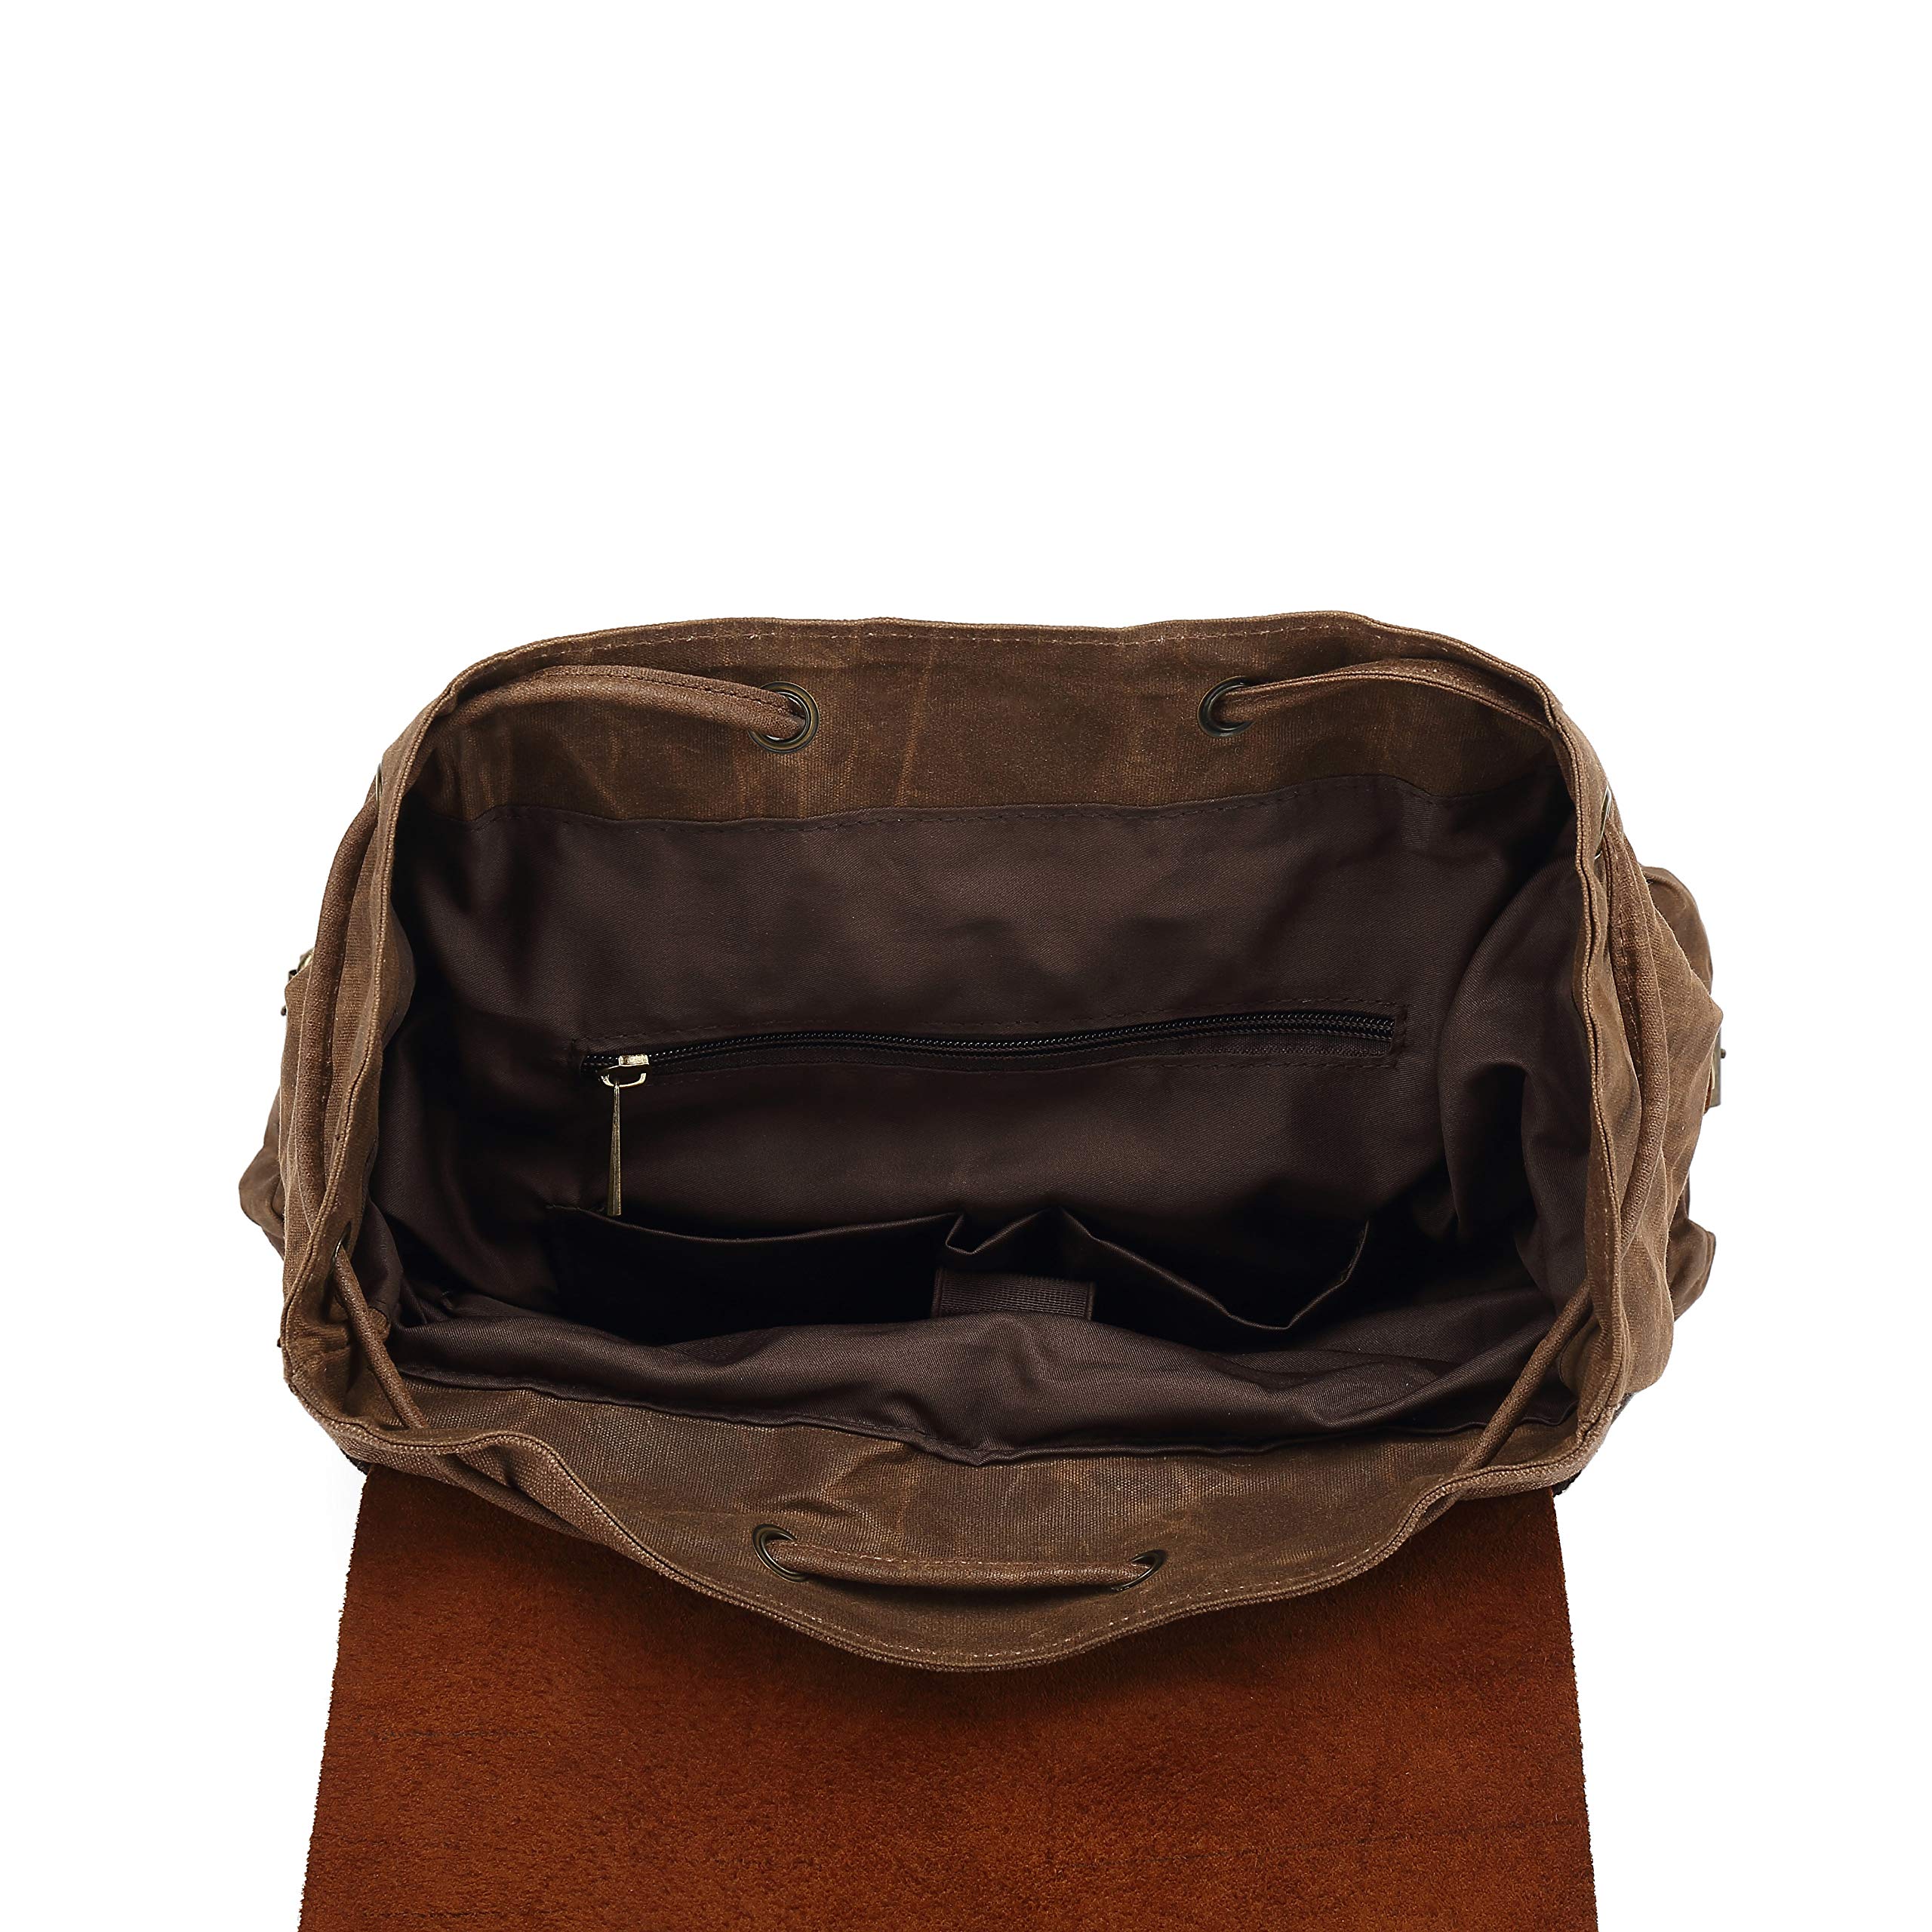 Jahomieo Vintage Leather Backpack for Men, Waxed Canvas Laptop Shoulder Rucksack for Travel Hiking